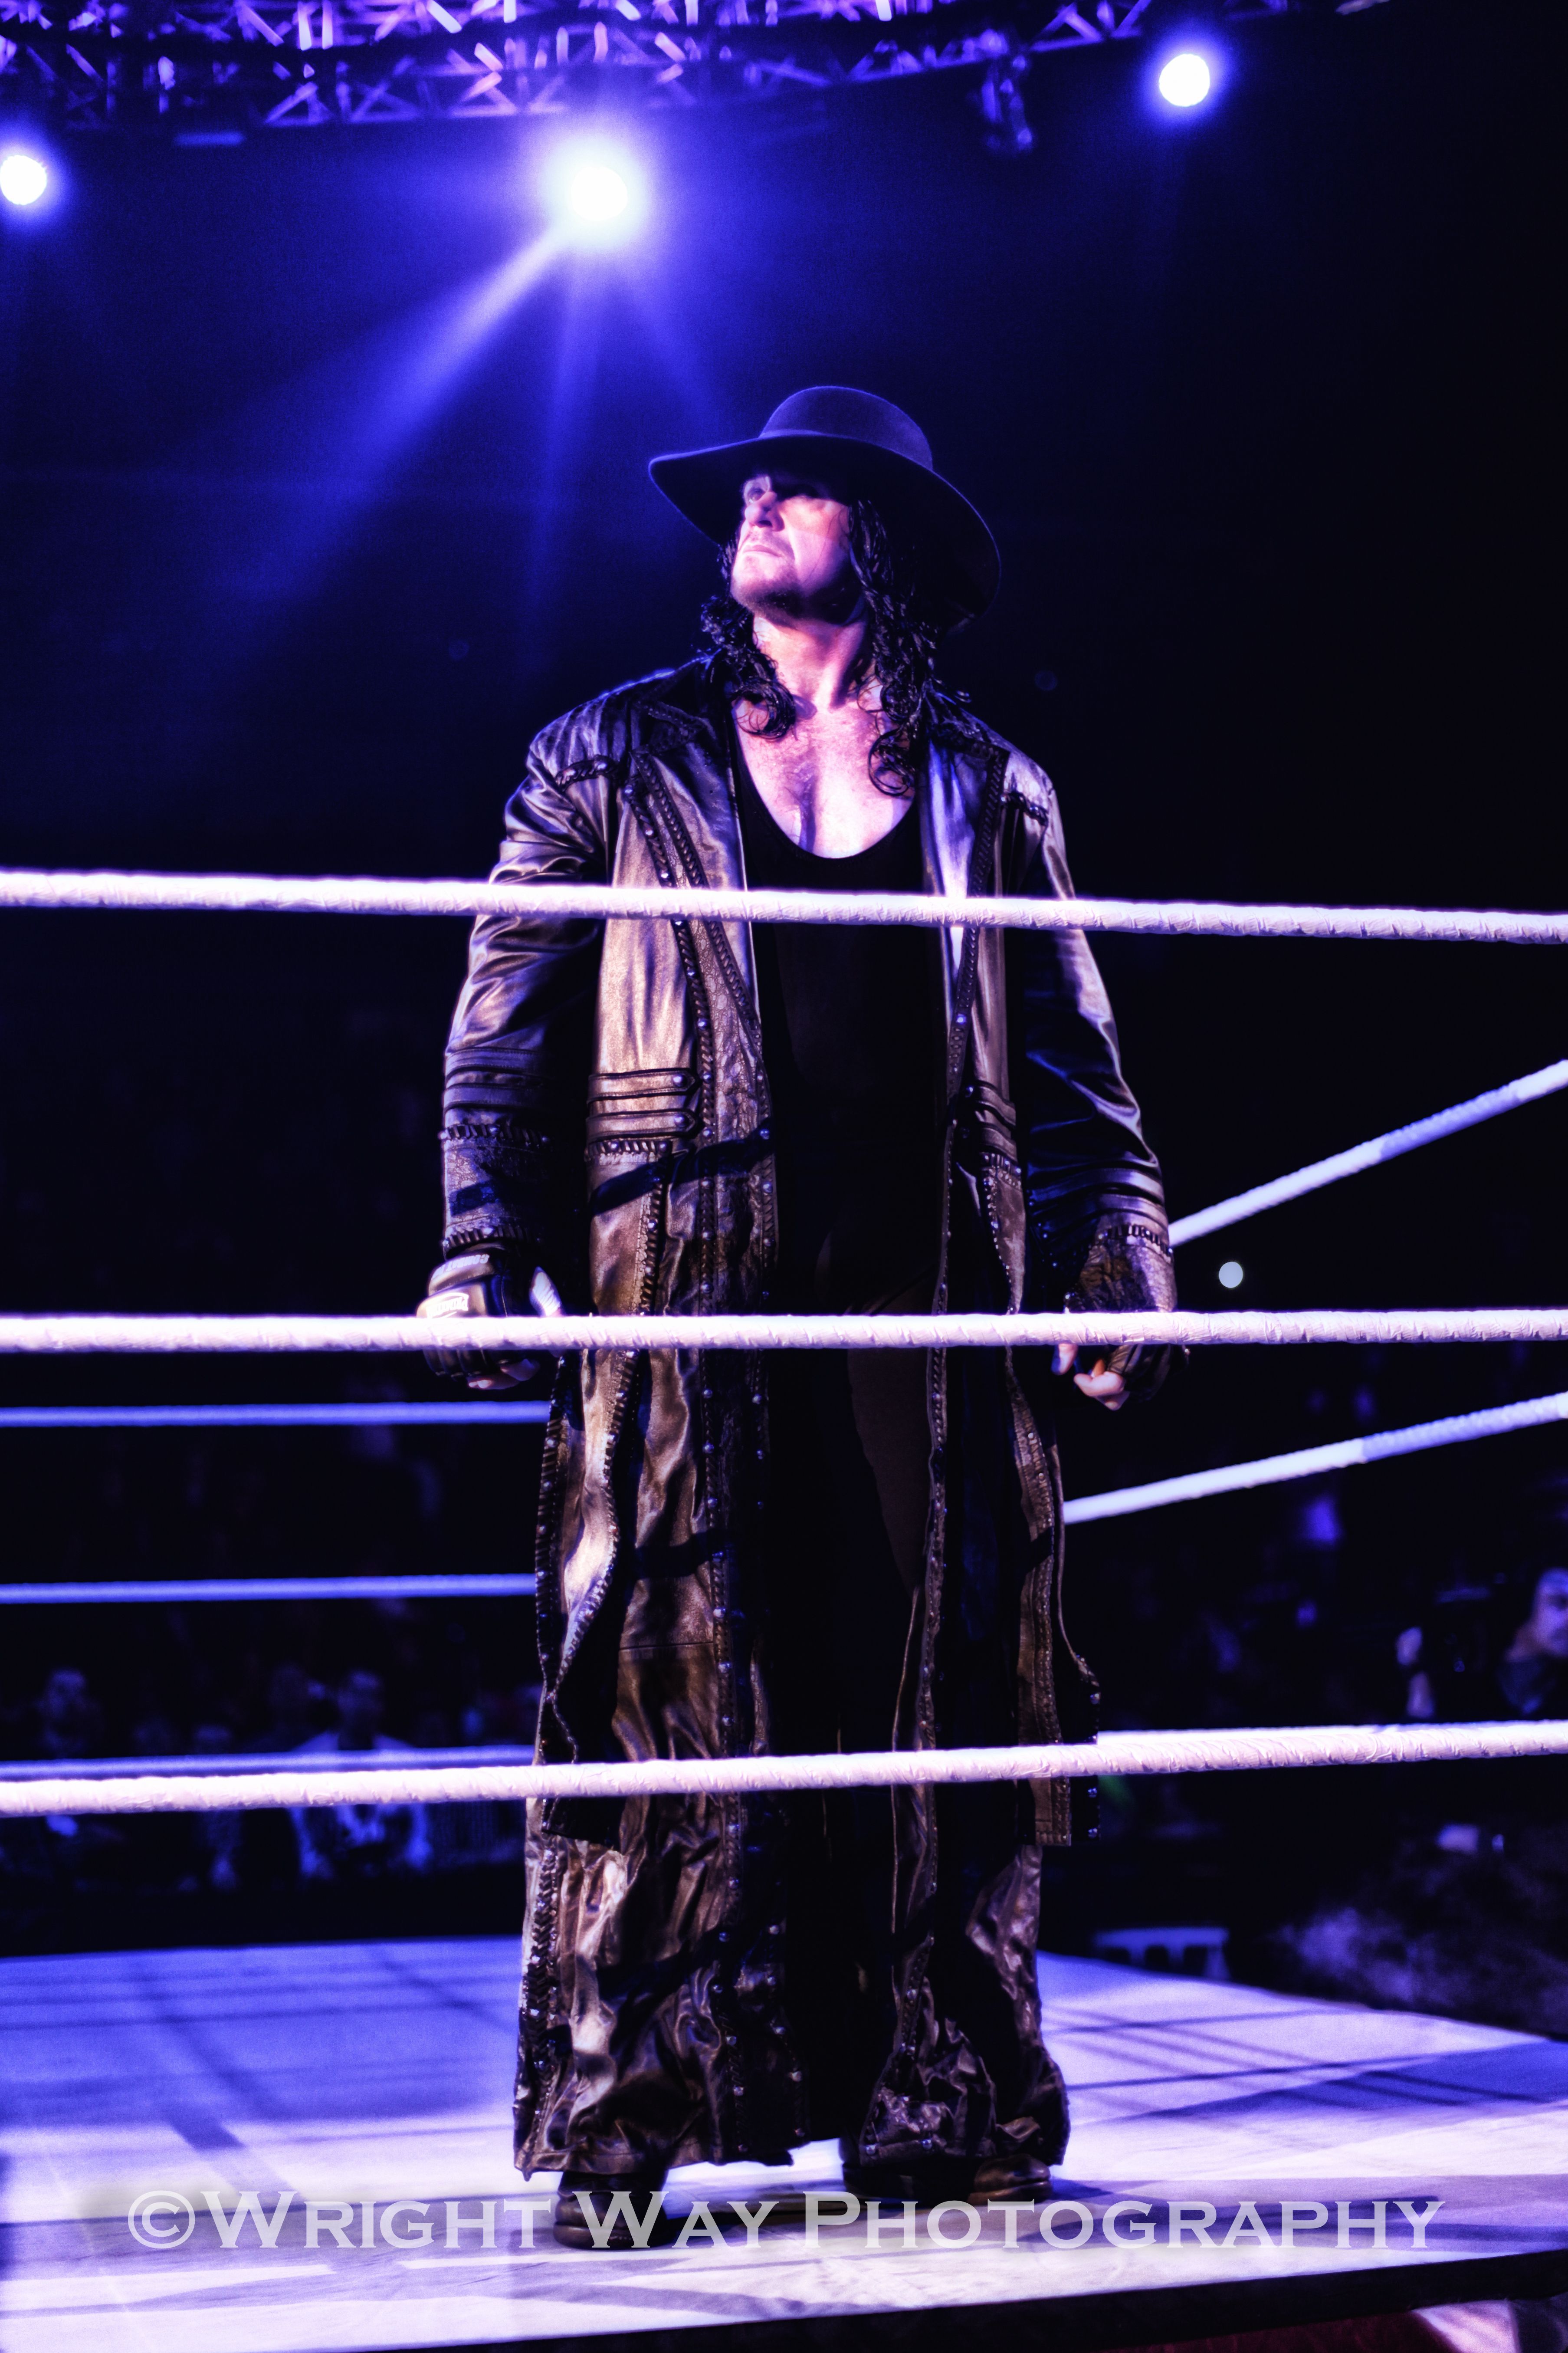 Undertaker dead image. 18 Best Undertaker image in